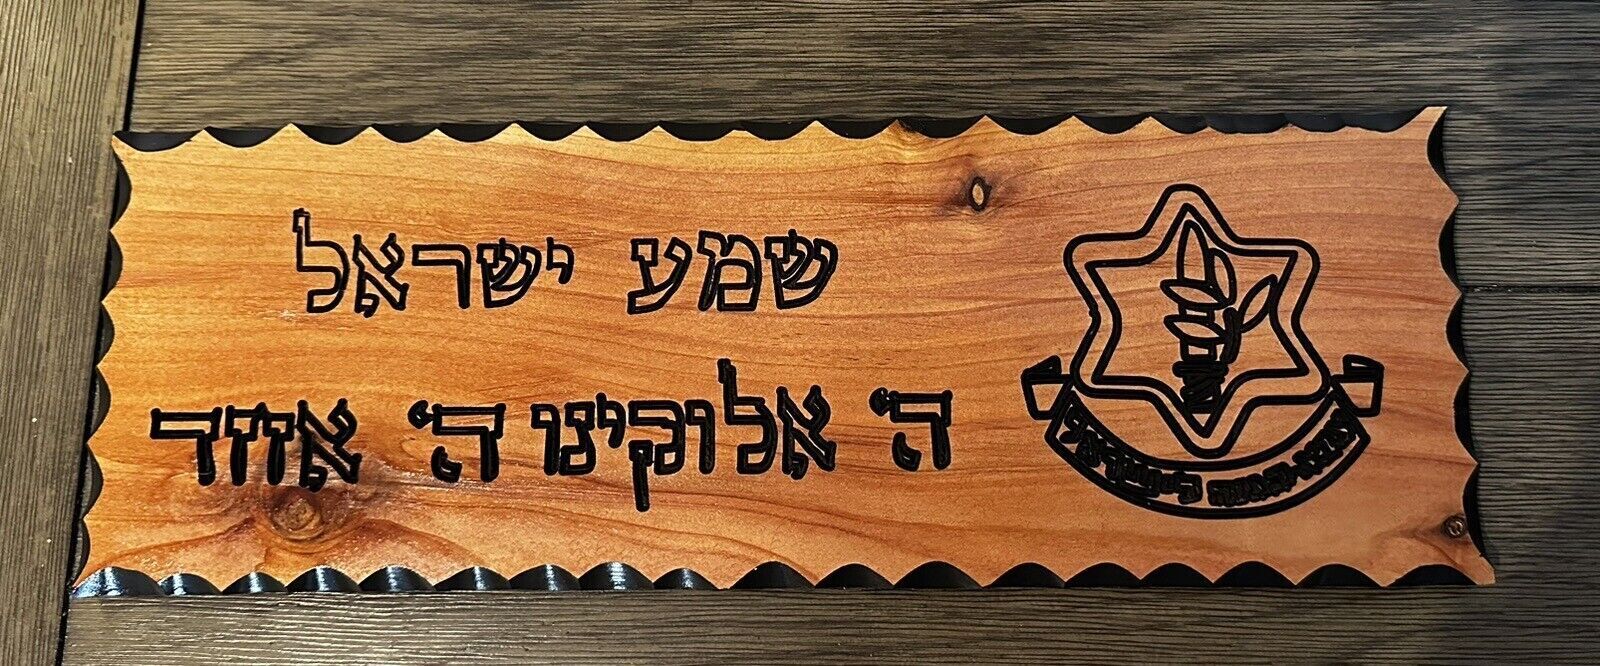 Hebrew Sign IDF Shema Israel Cedar Wood Carved Hand Made 16” X 5.5”